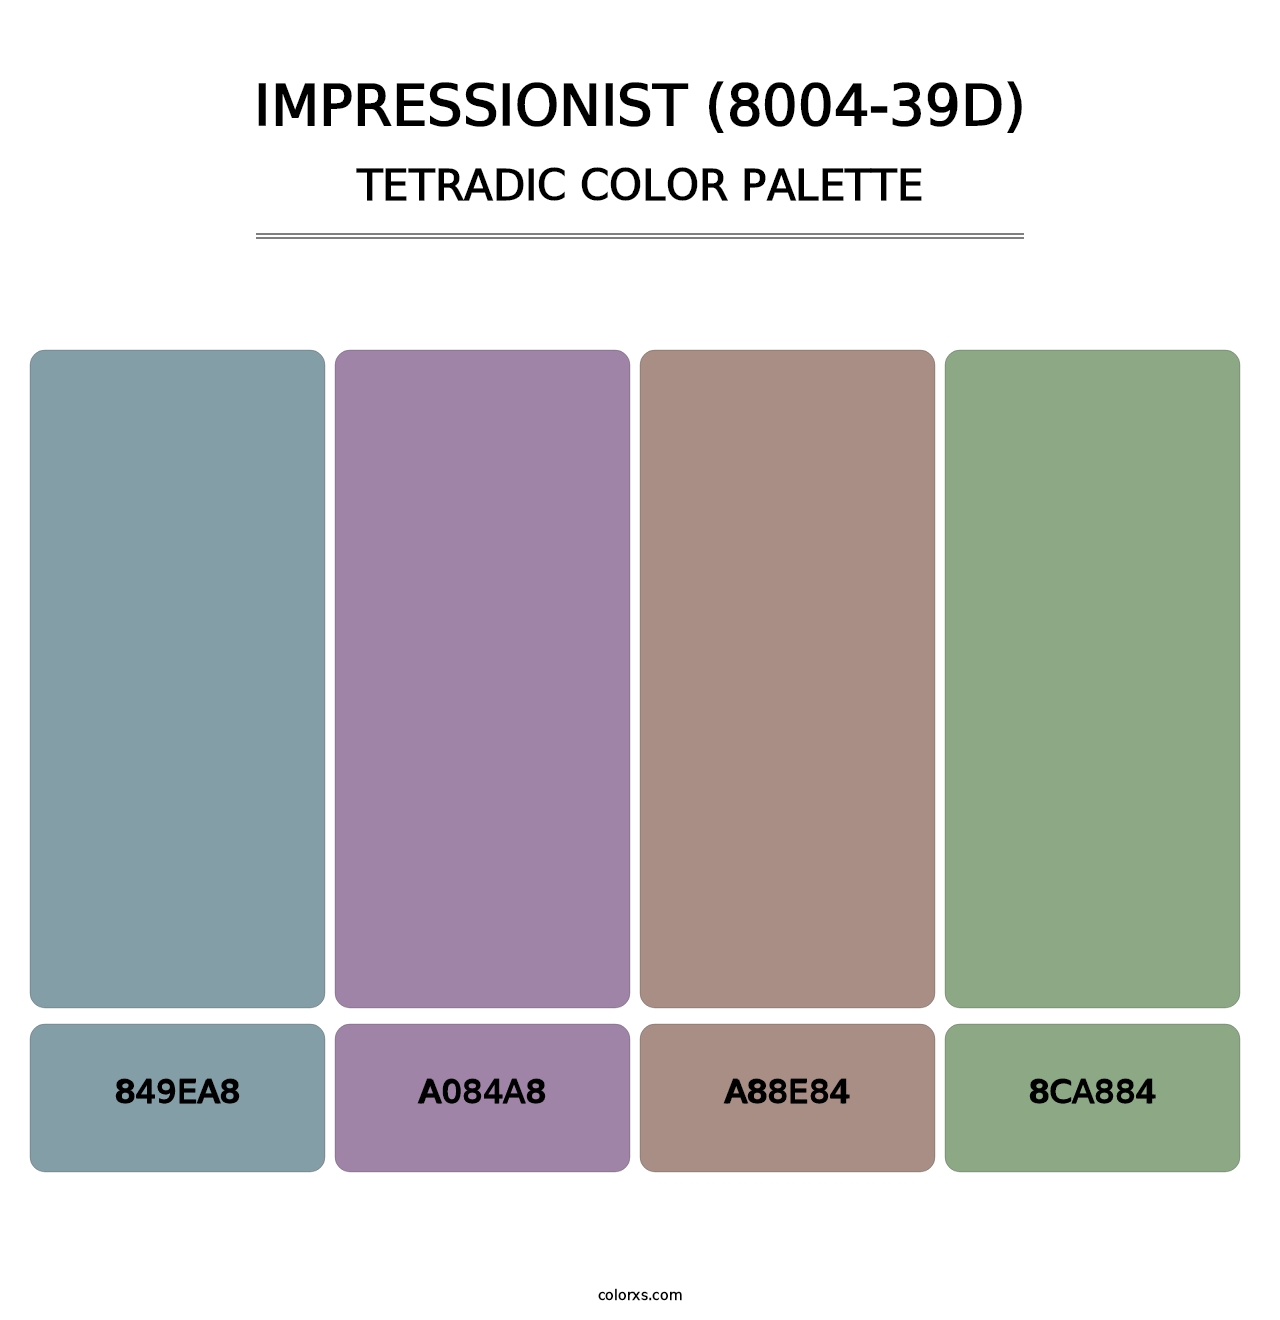 Impressionist (8004-39D) - Tetradic Color Palette